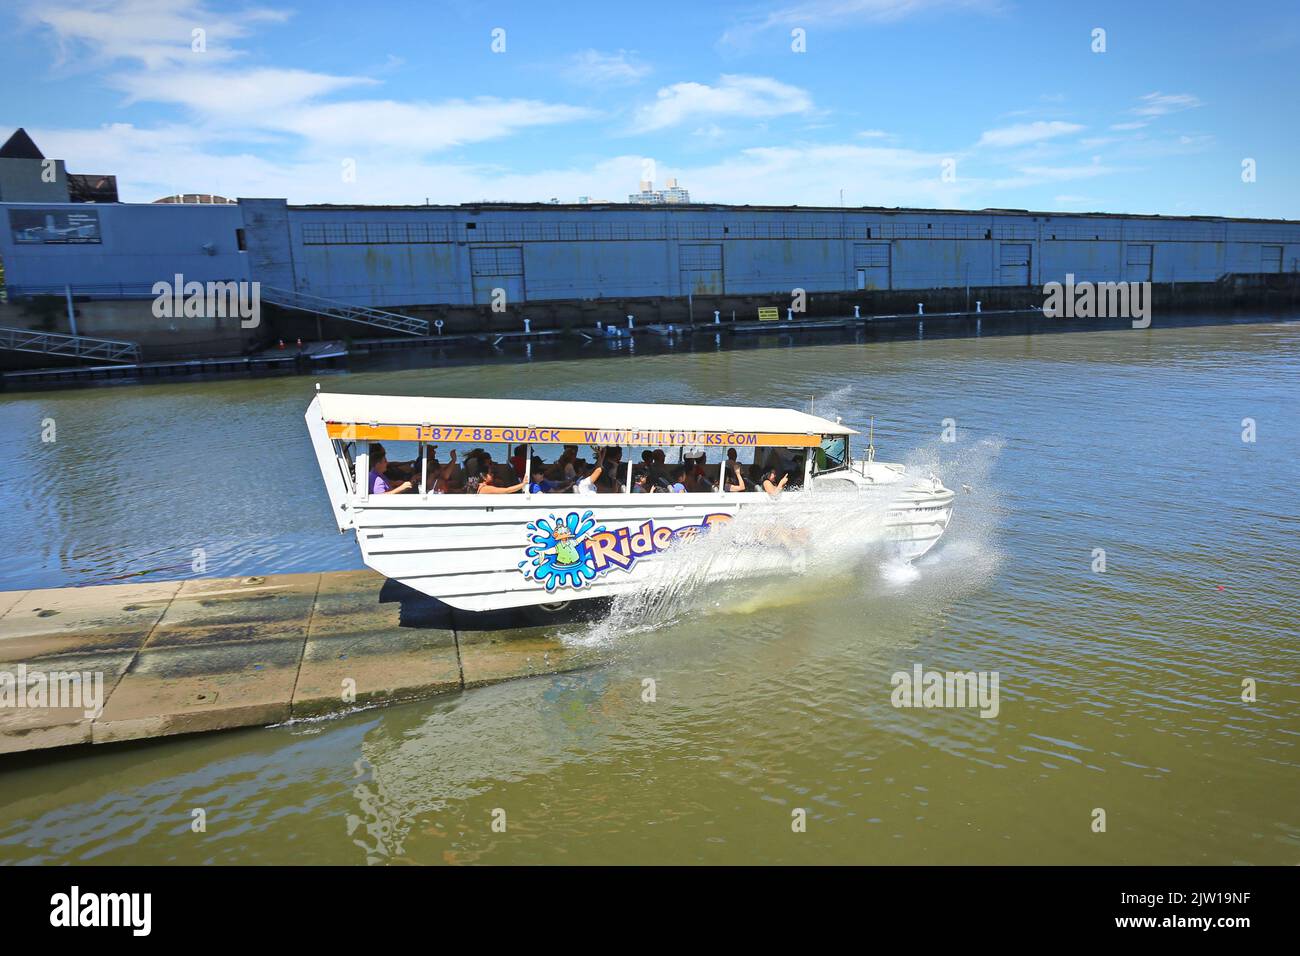 Fahren Sie mit dem Touristenboot Duck auf dem Fluss in Philadelphia. Philadelphia, Pennsylvania, USA - August 2019. Stockfoto